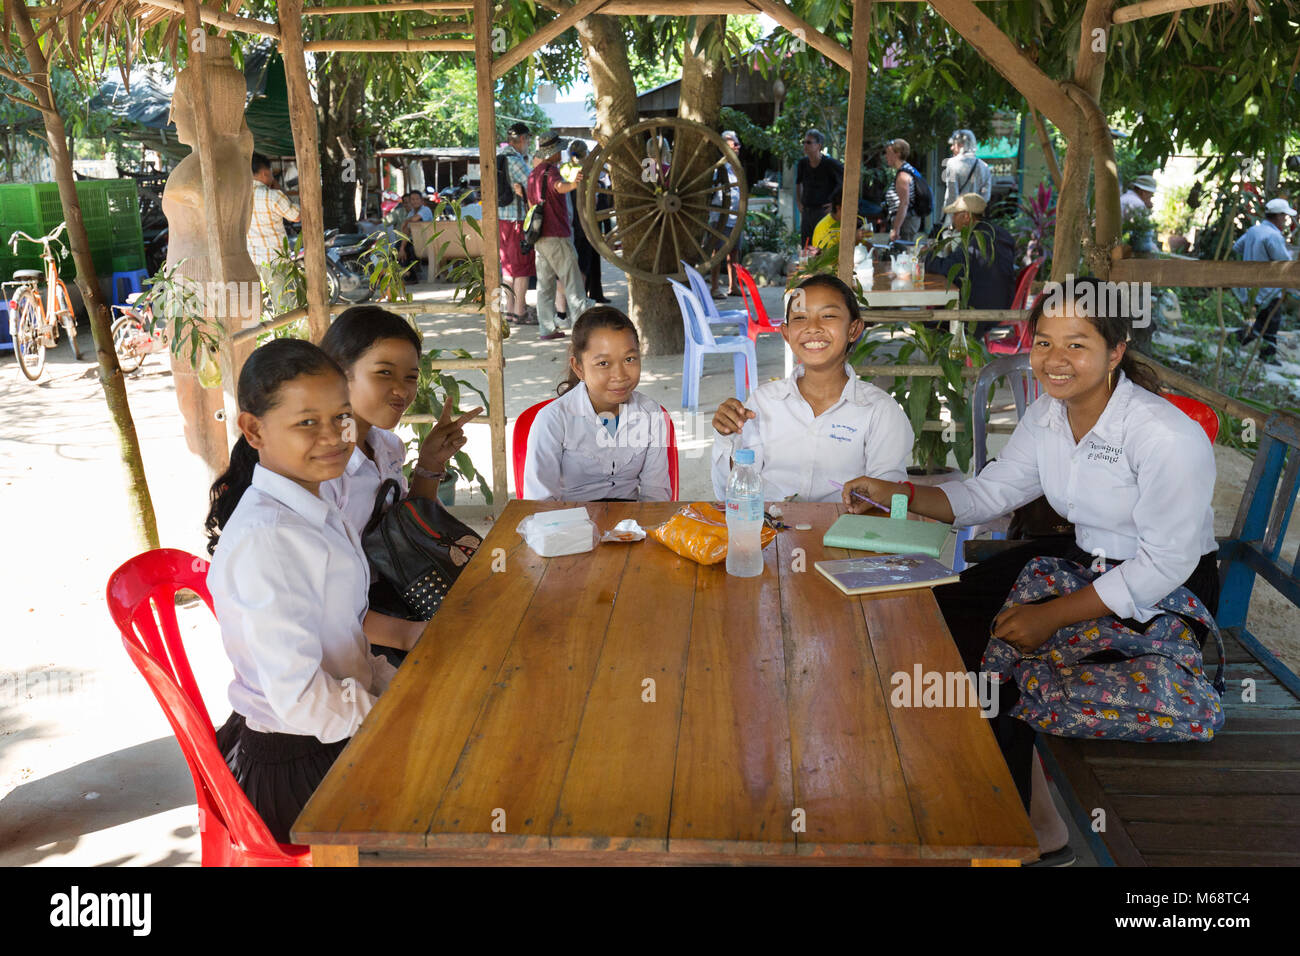 Cambodia children - teenage schoolgirls in school uniform aged 13-14 years,  Cambodia, Asia Stock Photo